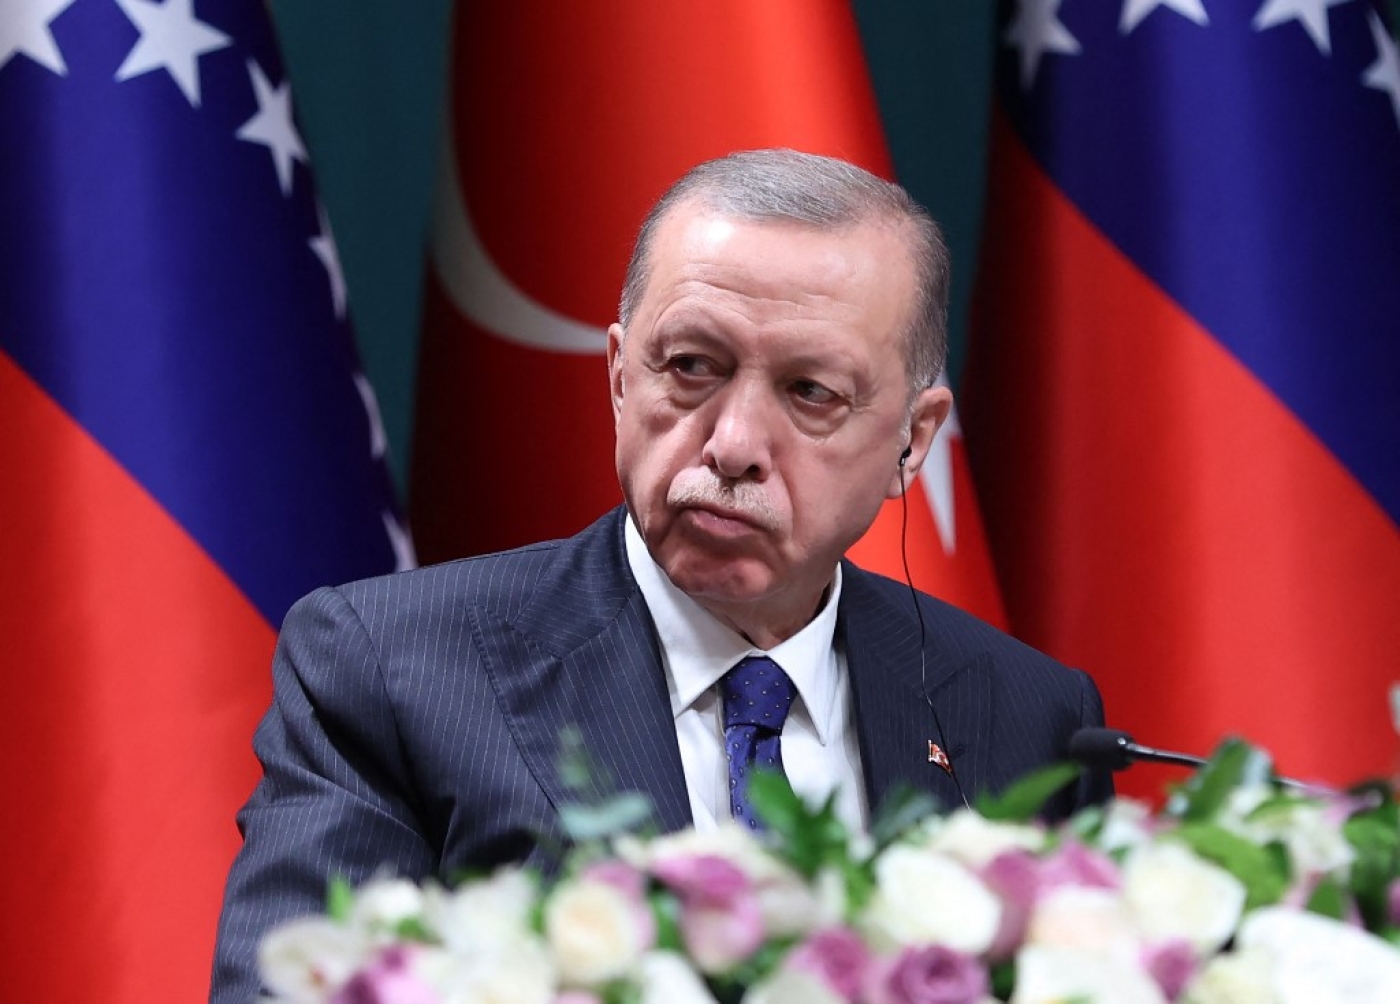 Turkey's President Recep Tayyip Erdogan attends a press conference in Ankara on 8 June 2022. (AFP)